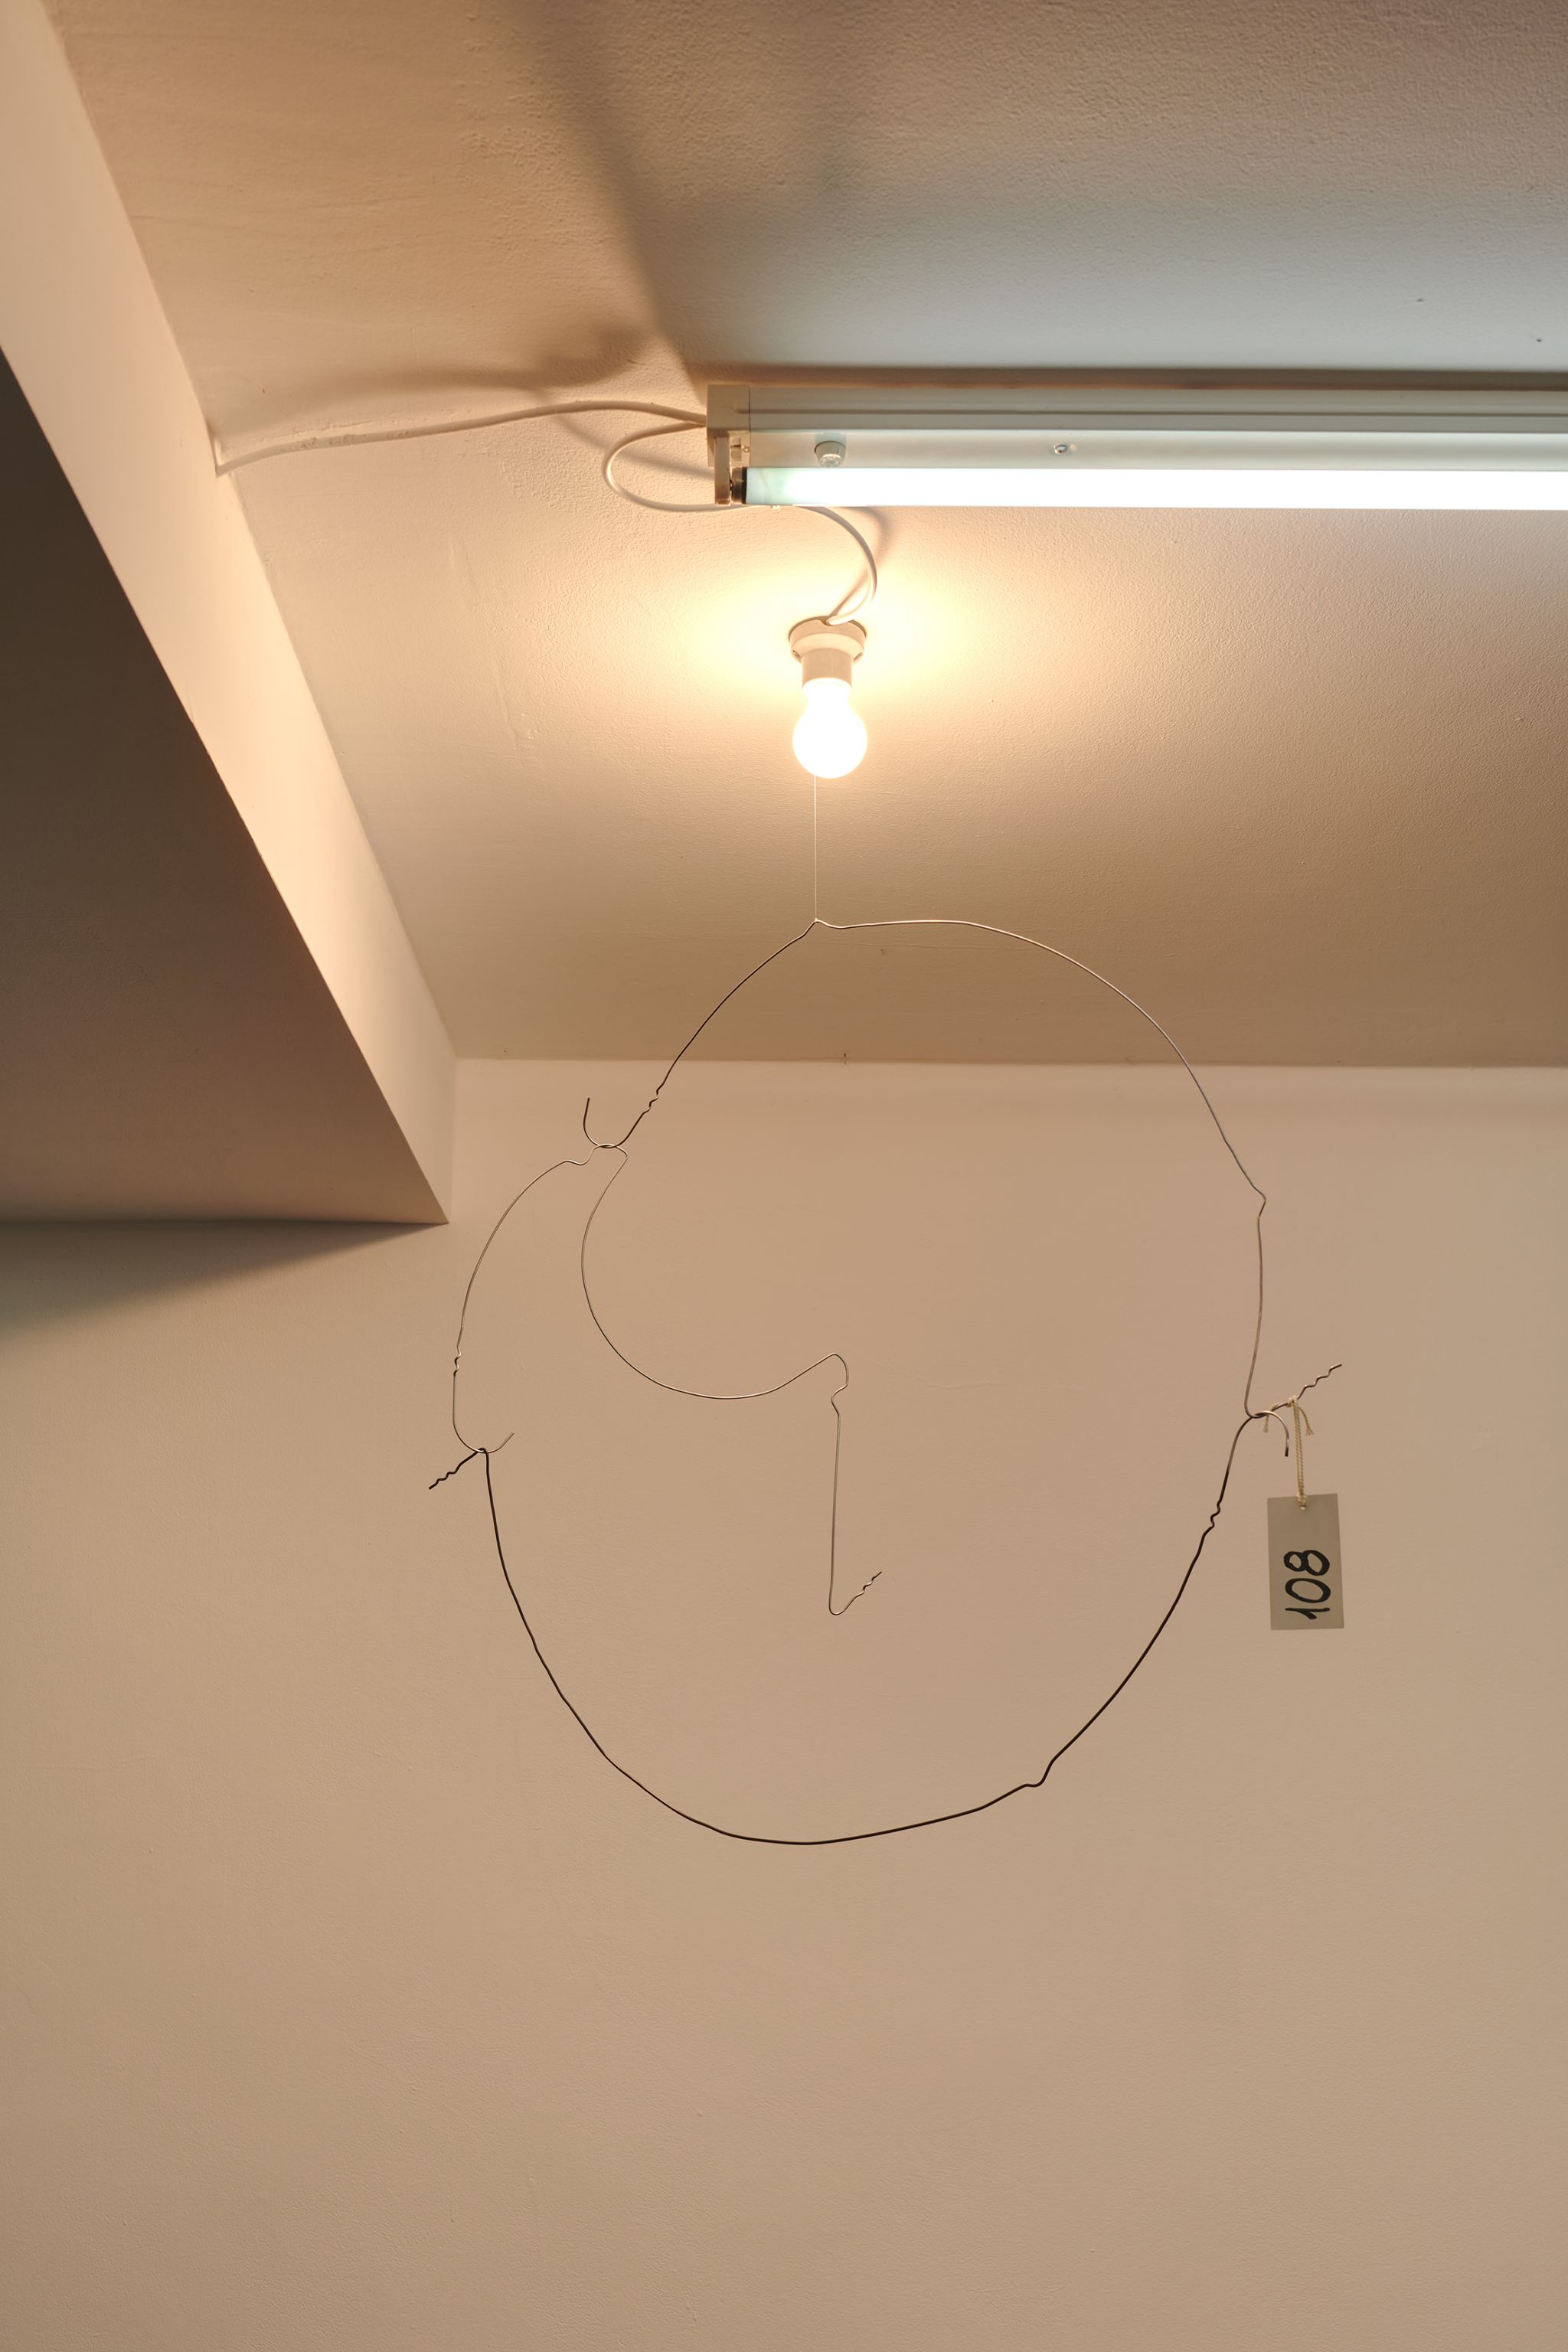 Davide Stucchi, Milan (Mobile 3) Kitchen, 2020, Ceramic lamp holder, light bulb, aluminum clothes hangers, tag, 100 ⁠× ⁠80 ⁠× ⁠25 ⁠⁠cm